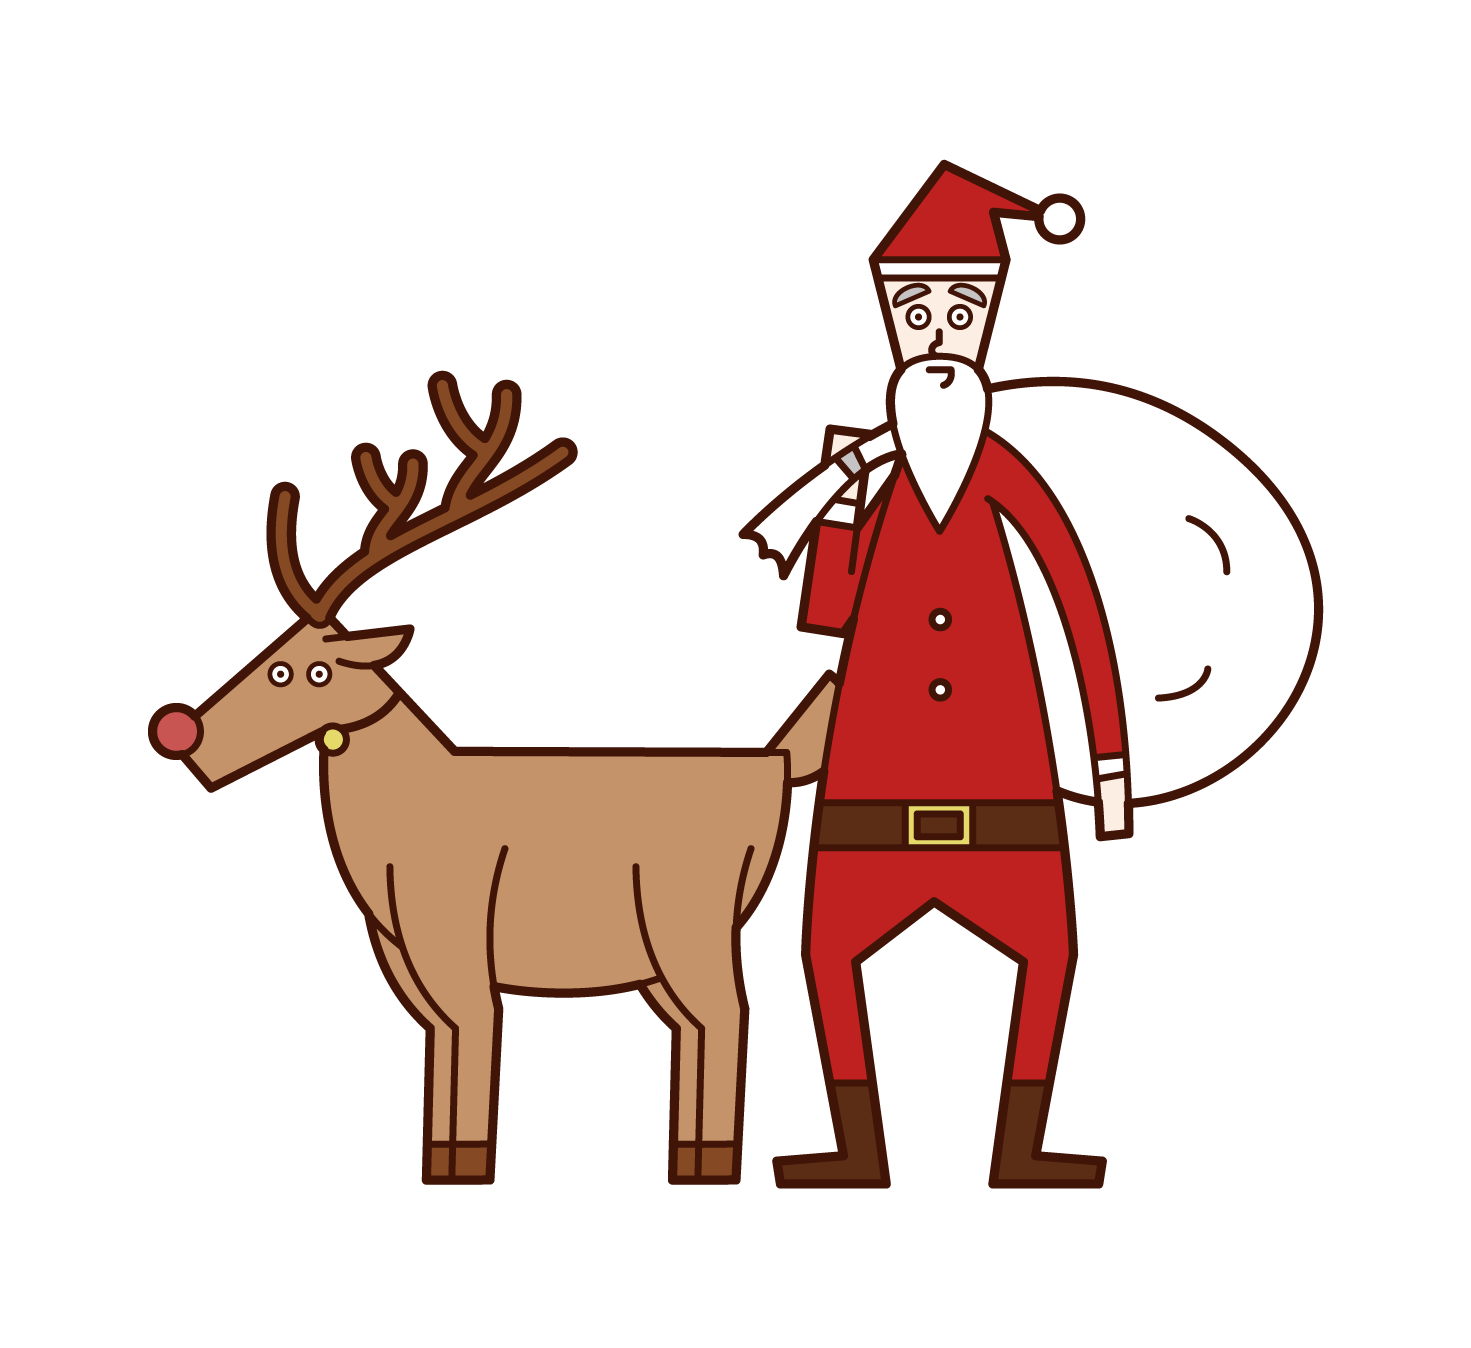 Reindeer and Santa Claus Illustrations